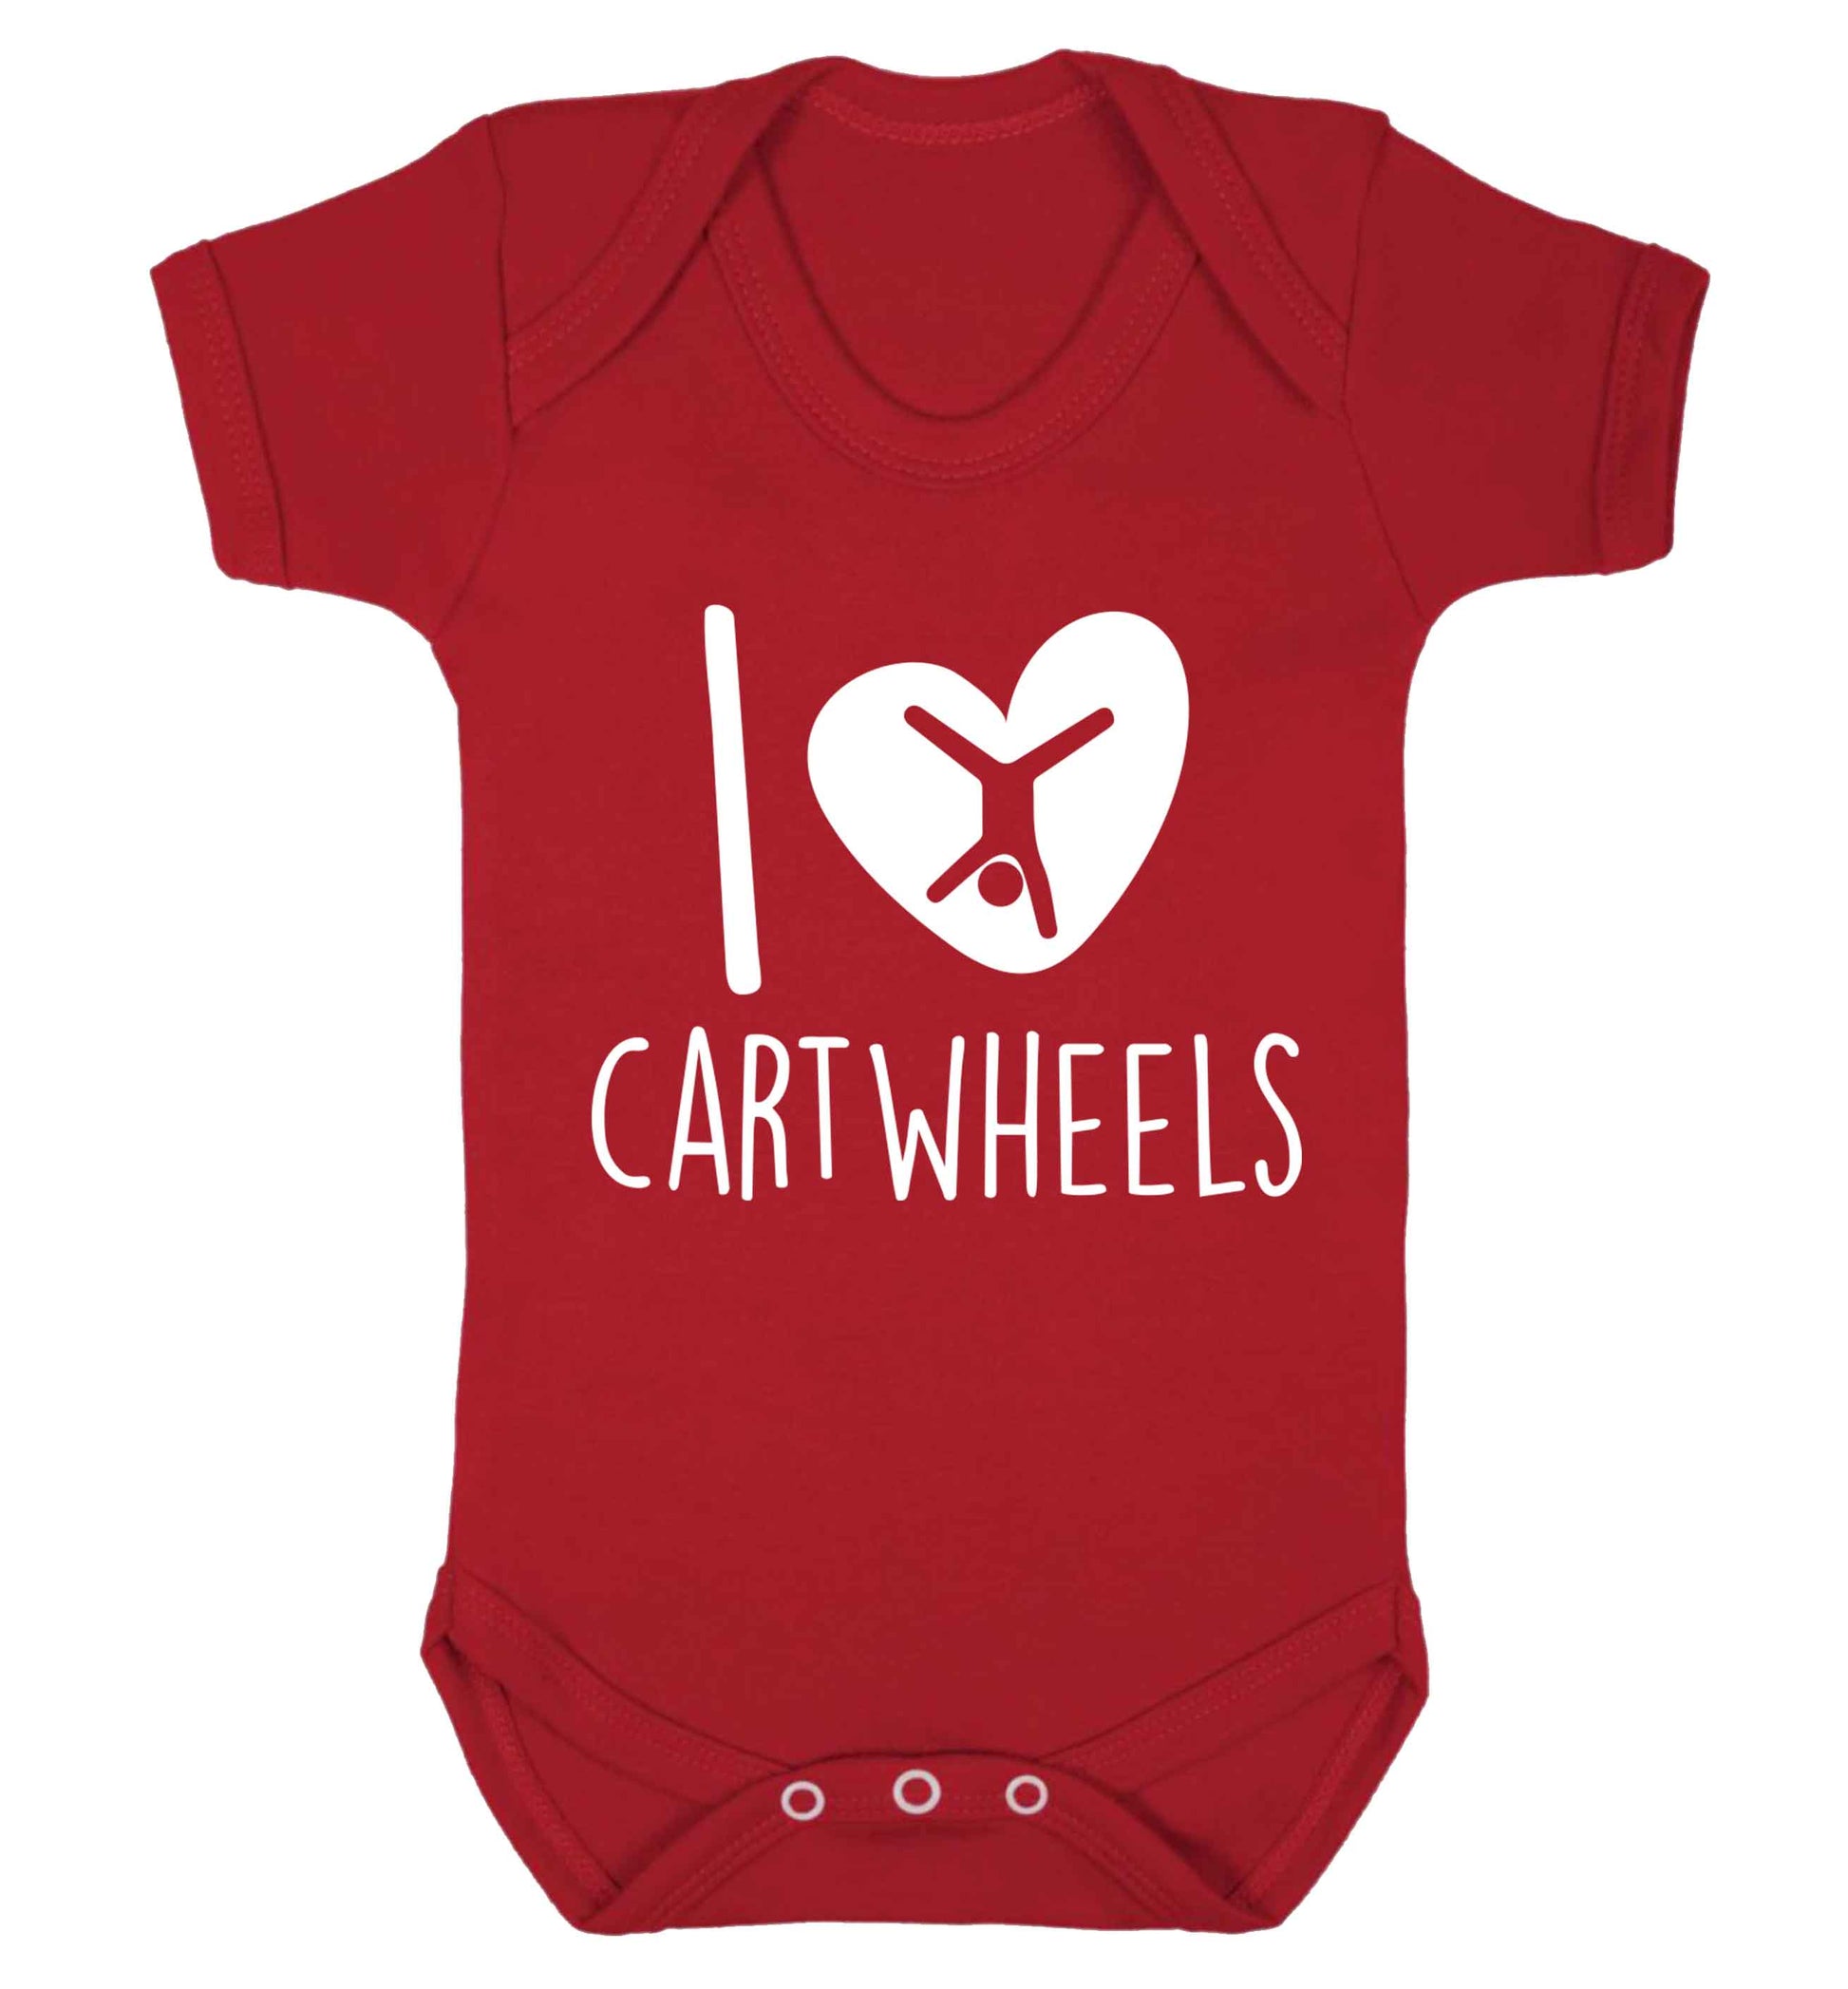 I love cartwheels Baby Vest red 18-24 months